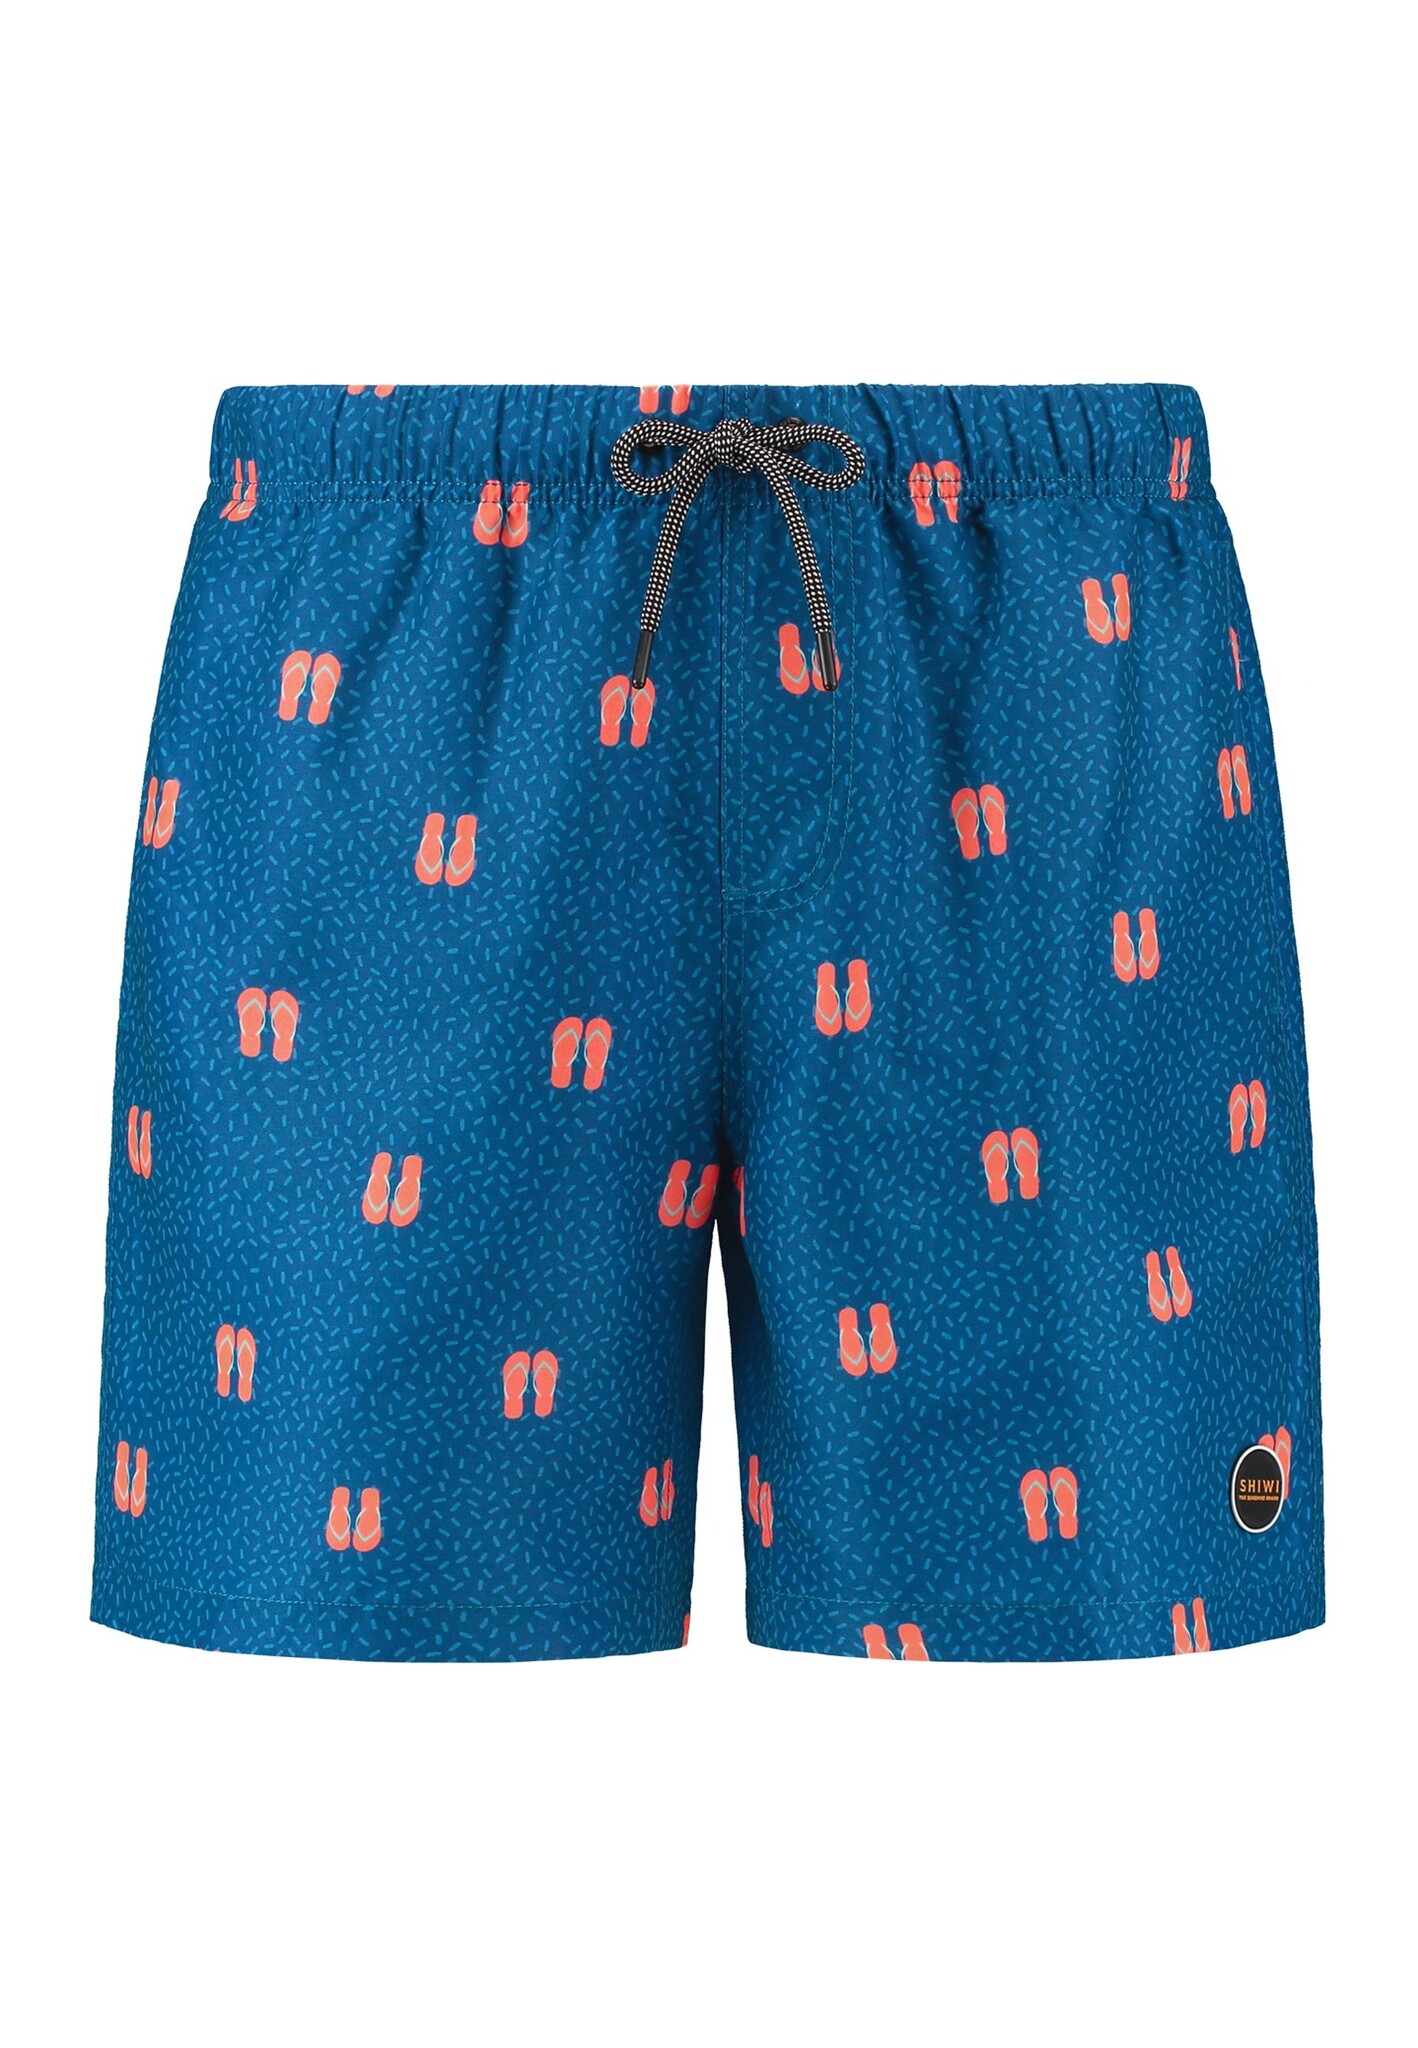 Shiwi Swim Shorts Flipflops (Ink Blue) 1441110228